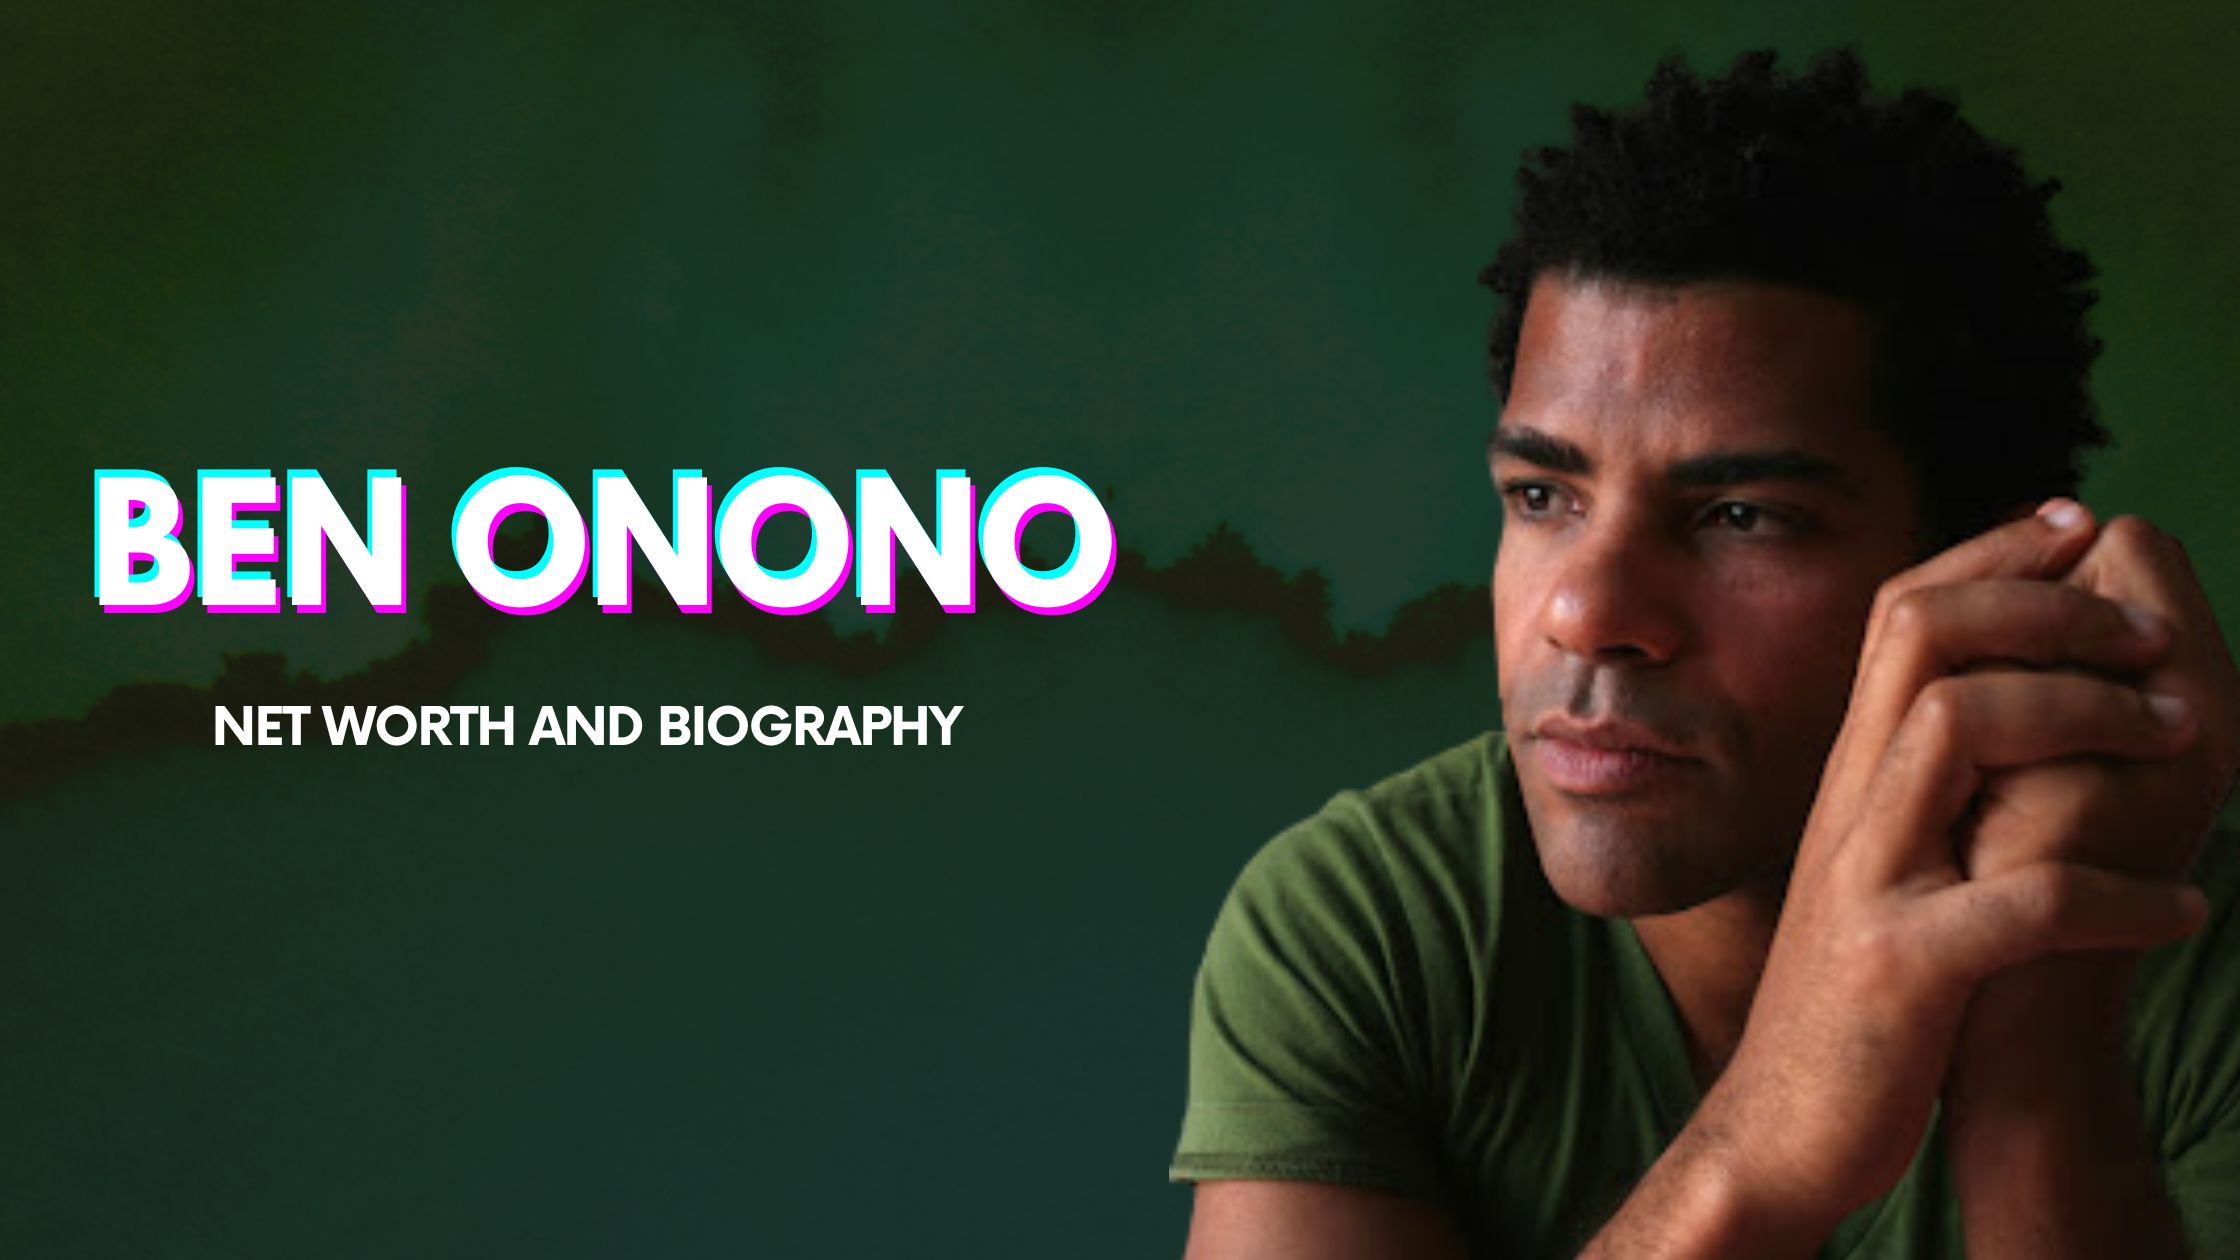 Ben Onono Net Worth And Biography